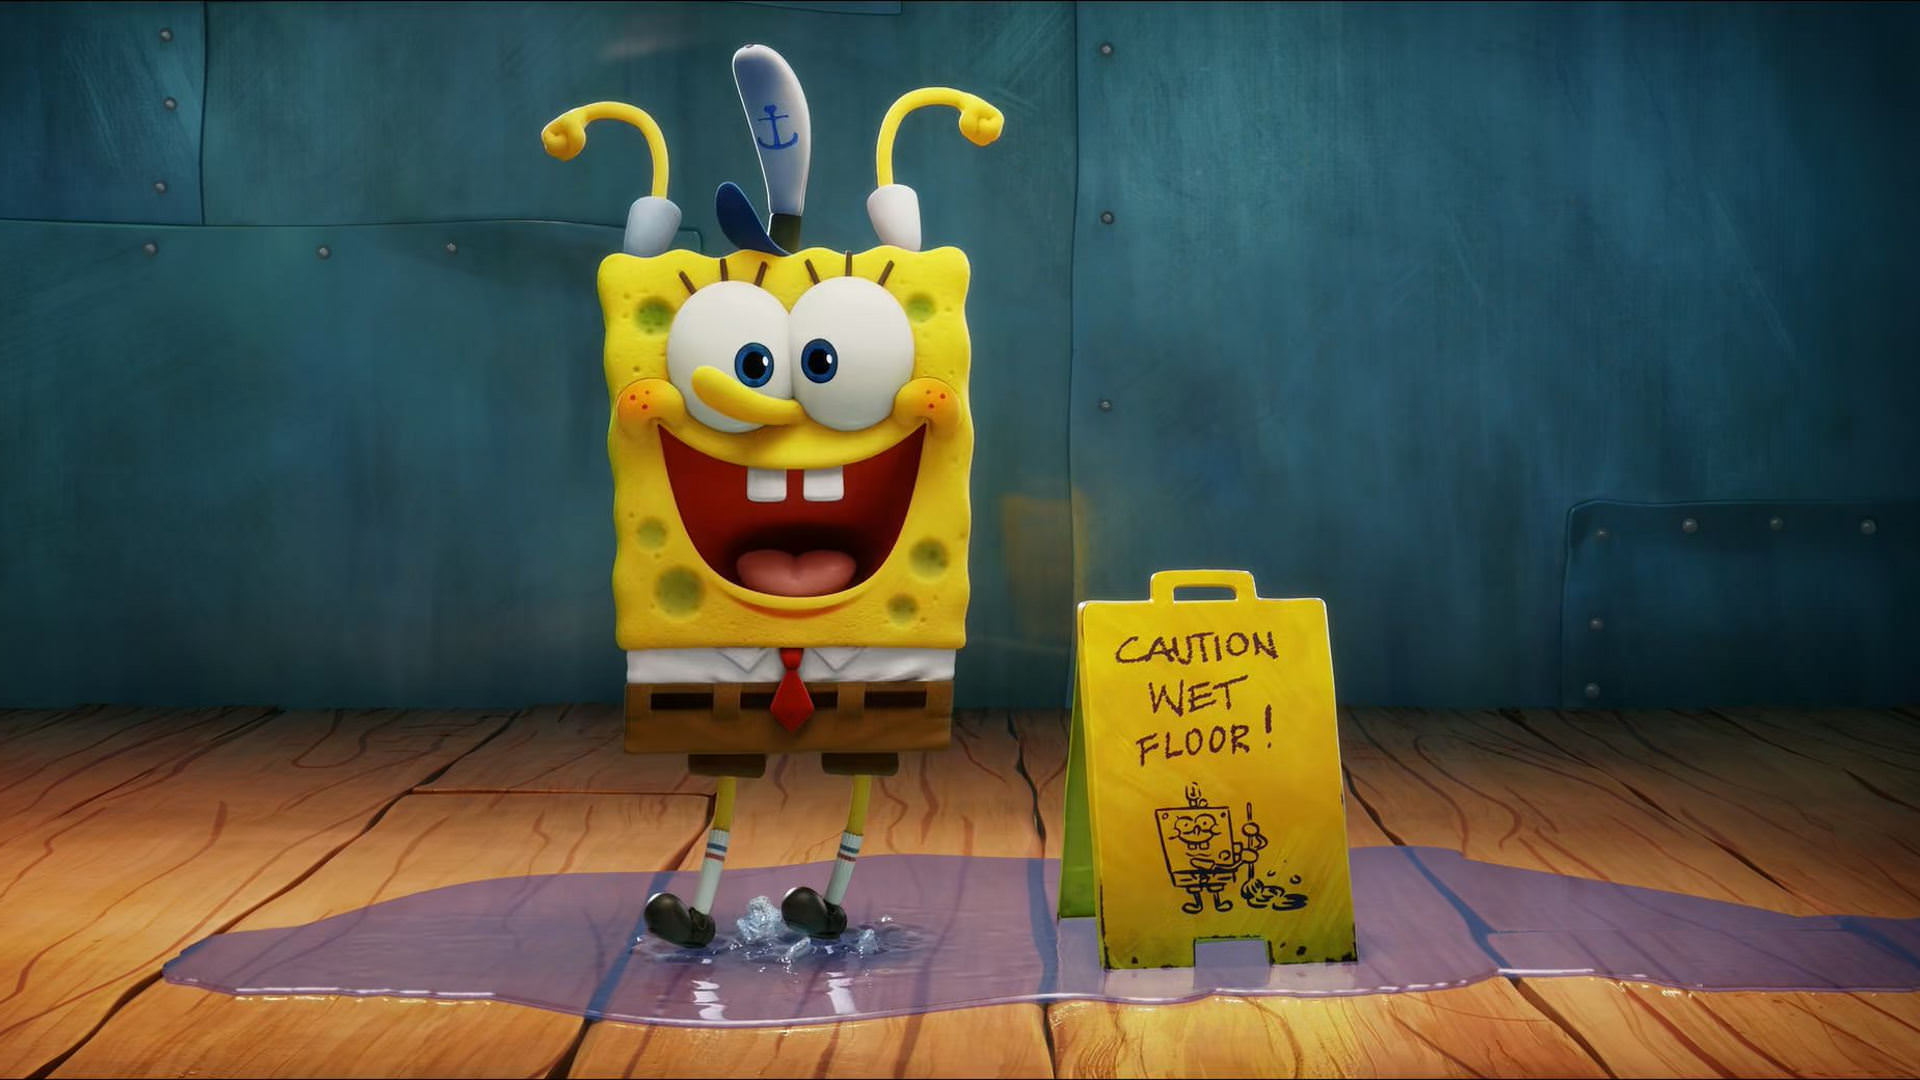 نقد انیمیشن The SpongeBob Movie: Sponge on the Run